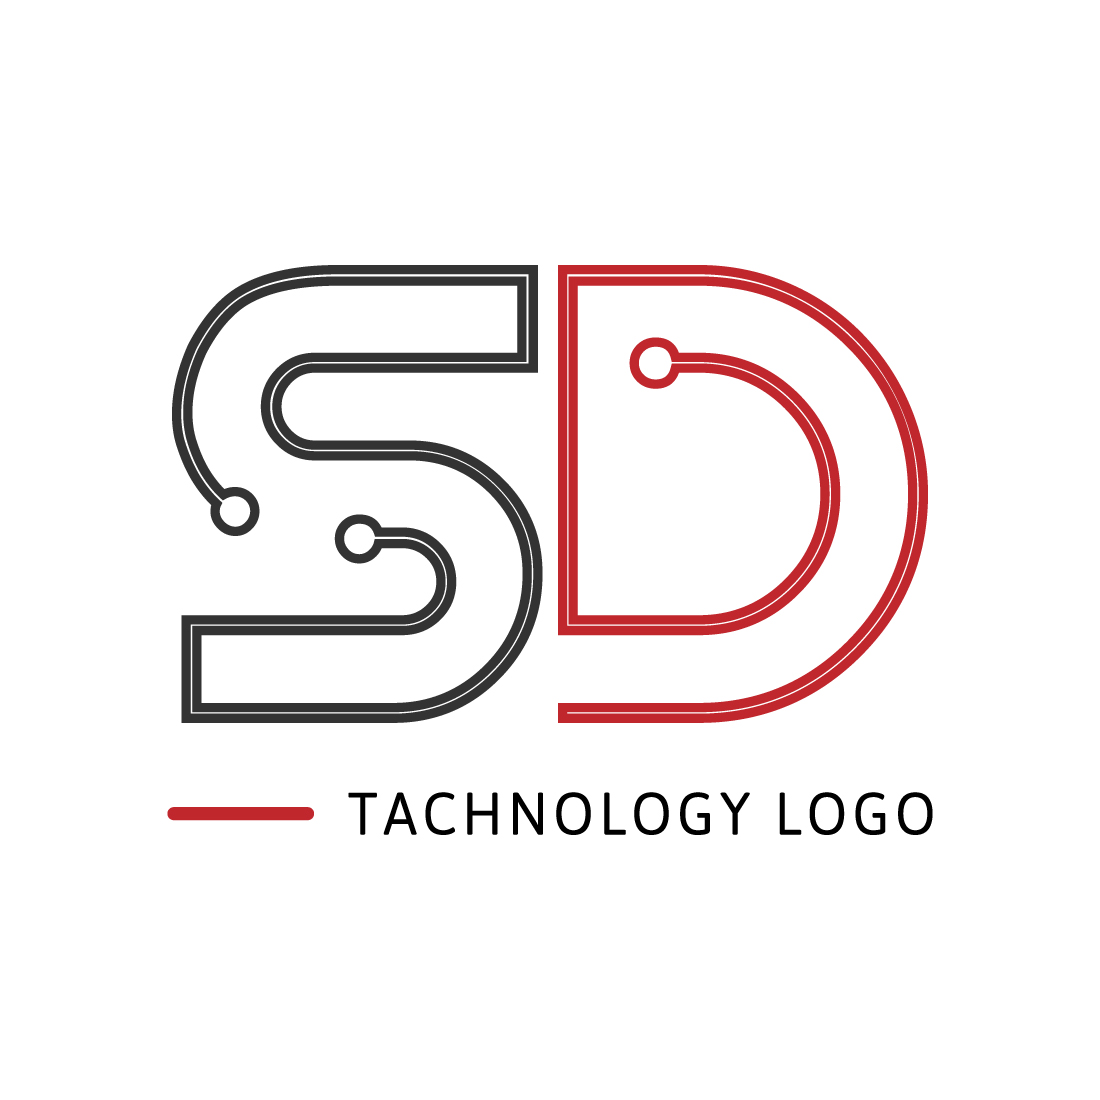 Initials SD letters logo design vector icon SD technology logo design DS logo monogram best identity SD logo design template arts preview image.